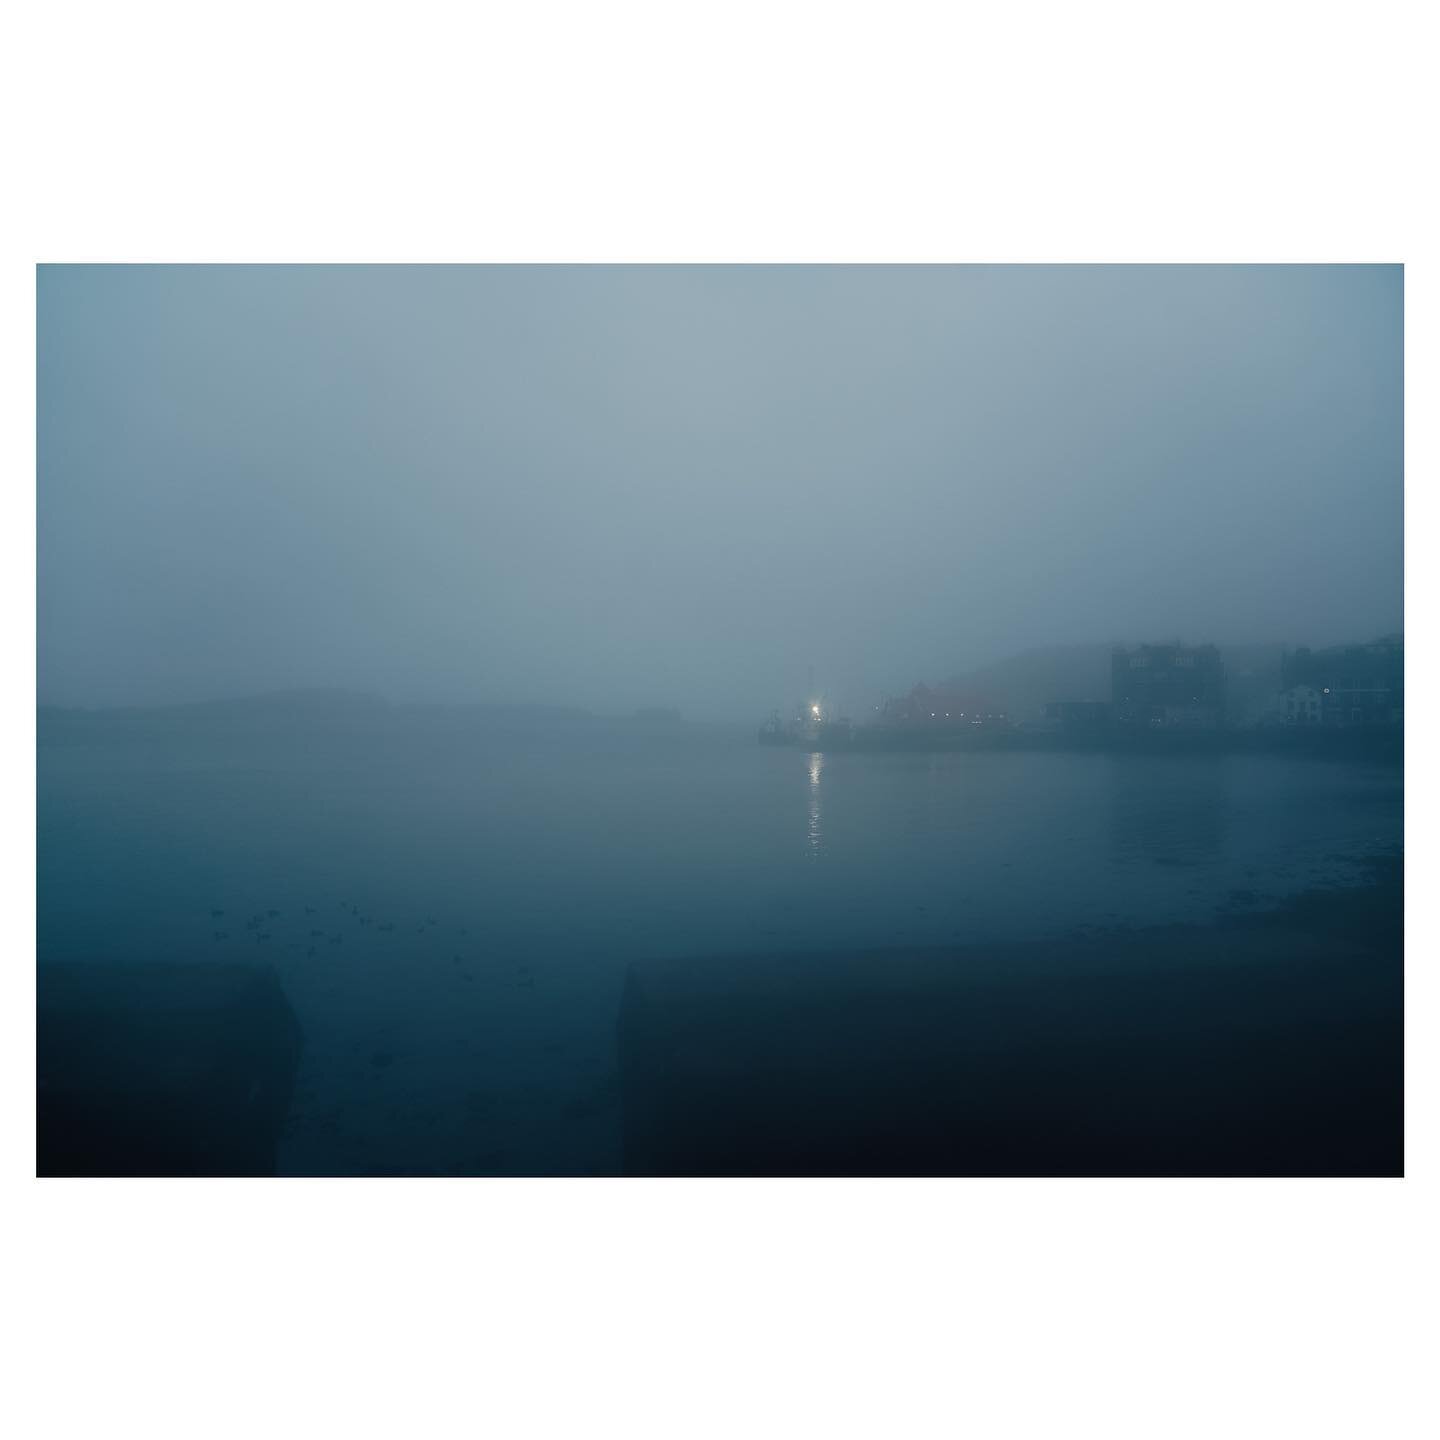 Oban at &ldquo;sunset&rdquo; in November, starring The Fog. 🕯